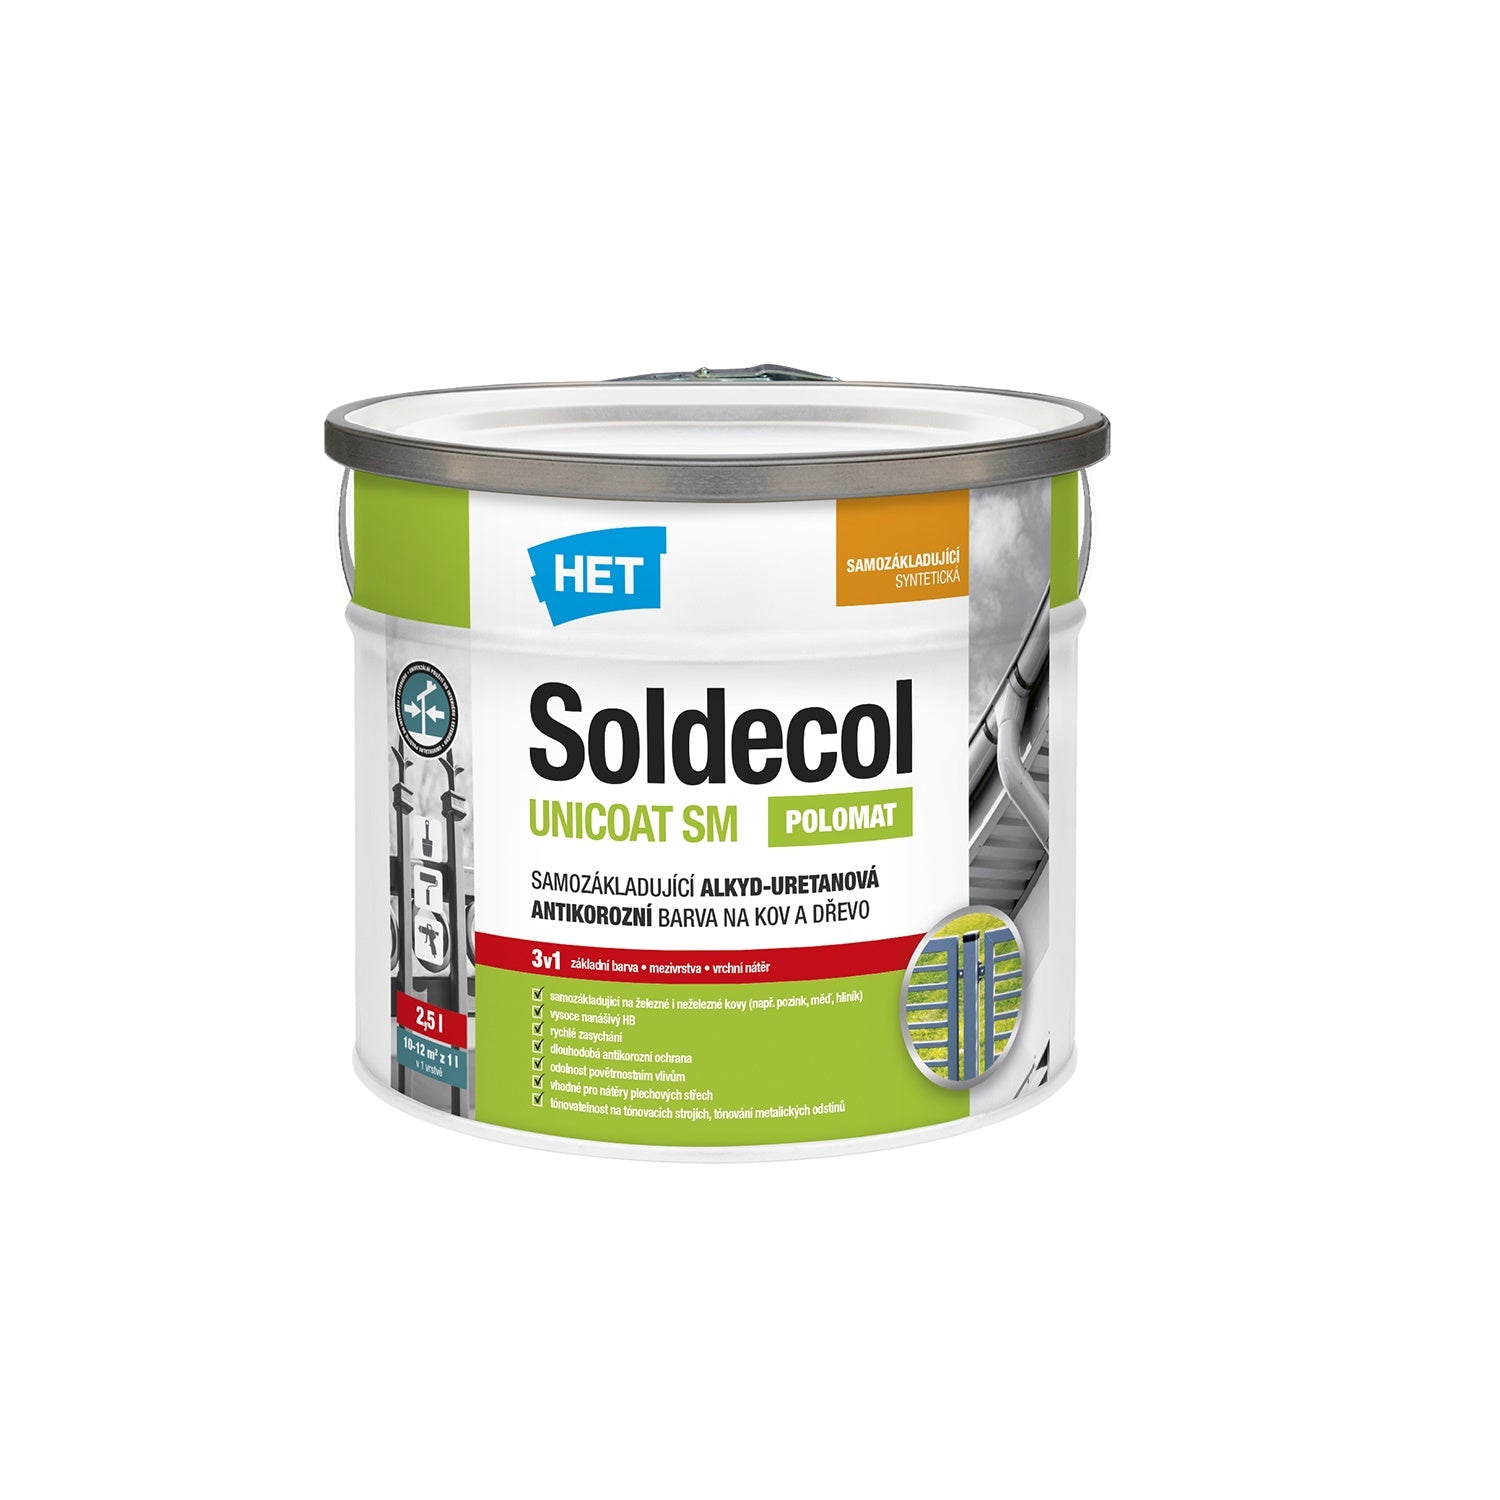 HET Soldecol UNICOAT SM 3v1 polomatná antikorózna farba na kov a drevo 0,6 l